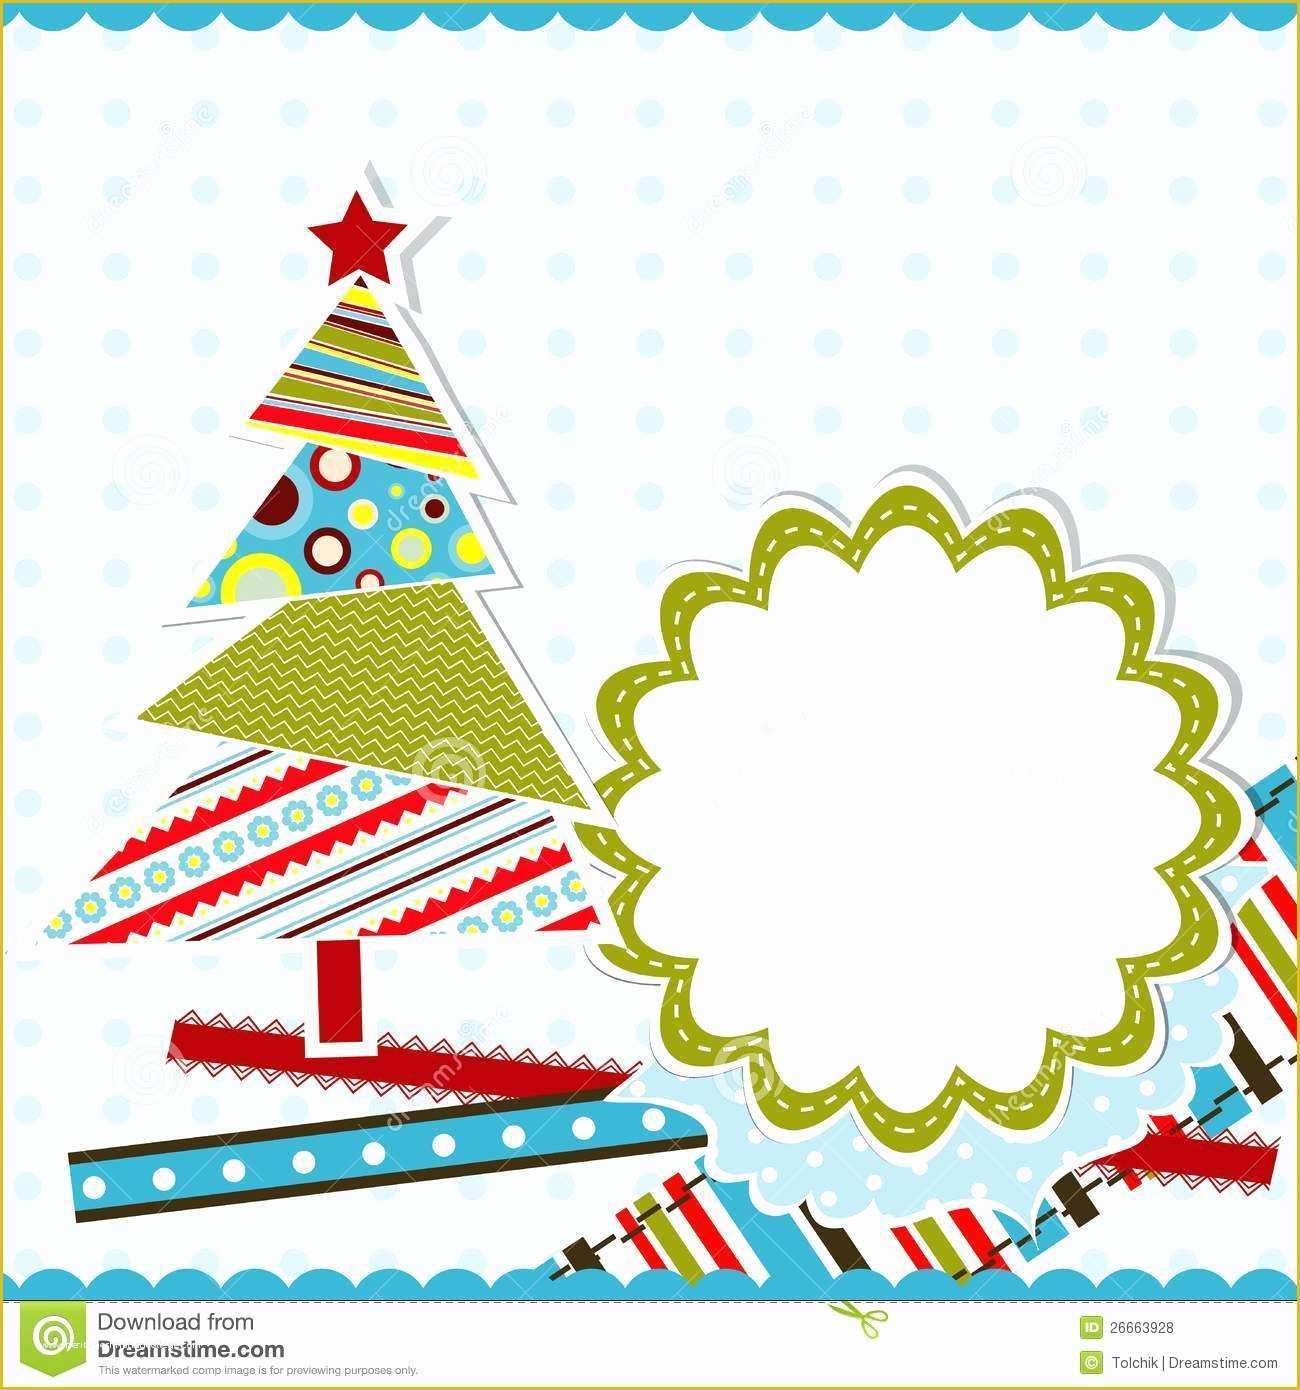 Free Xmas Postcards Templates Of Greetings Card Templates for Christmas – Fun for Christmas